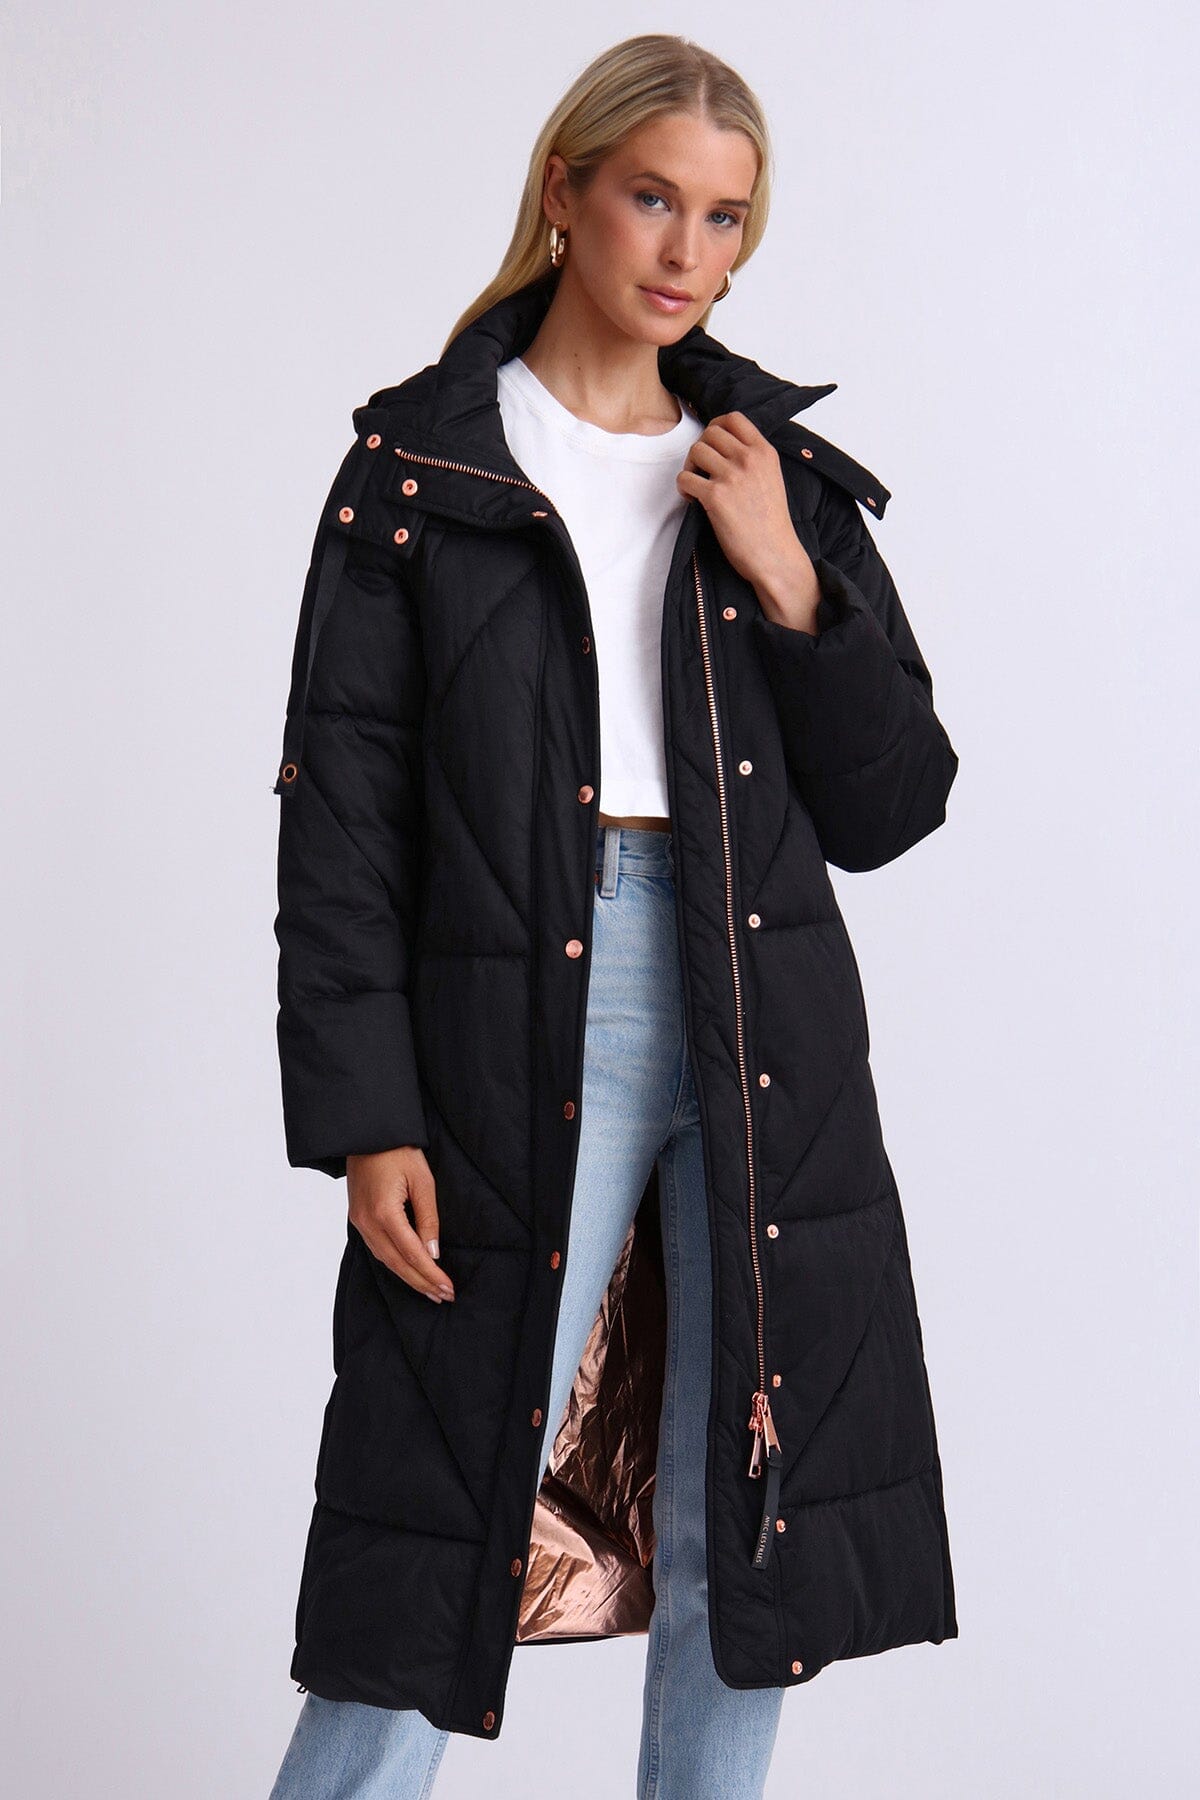 Black thermal puff longline cloud duvet puffer coat jacket - figure flattering long fashion coats jackets for women